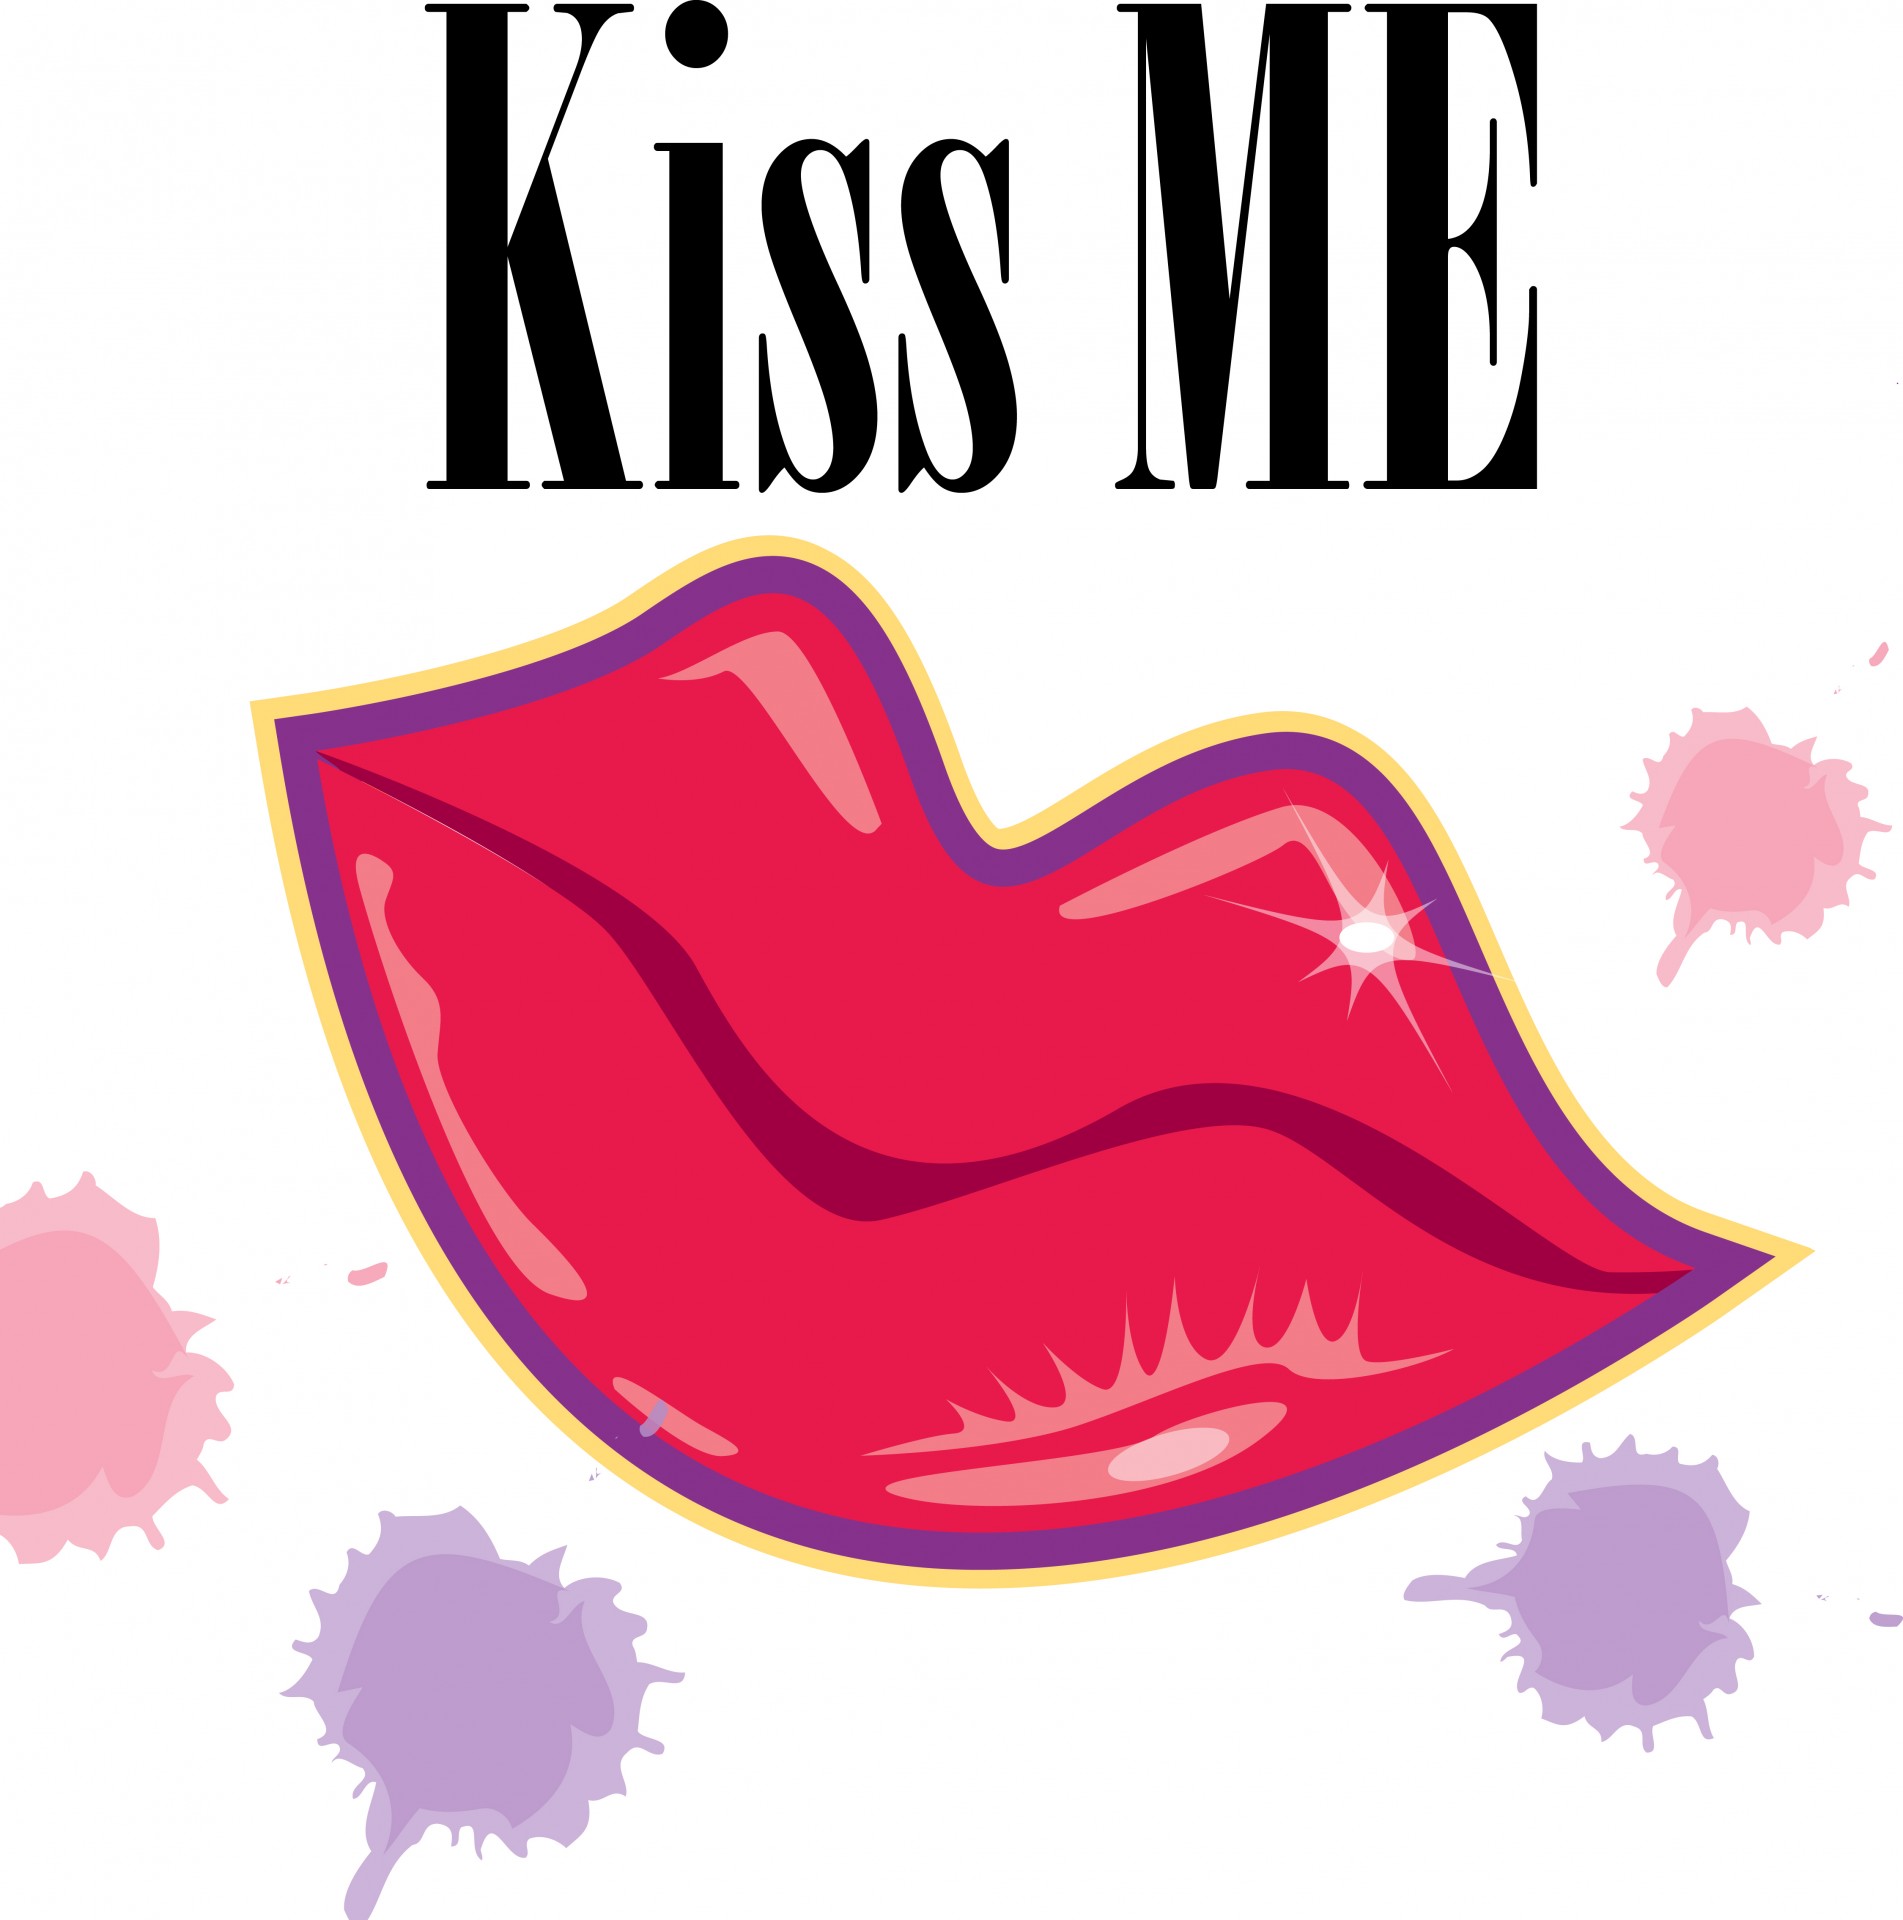 Kiss me lips clip art free stock photo public domain pictures